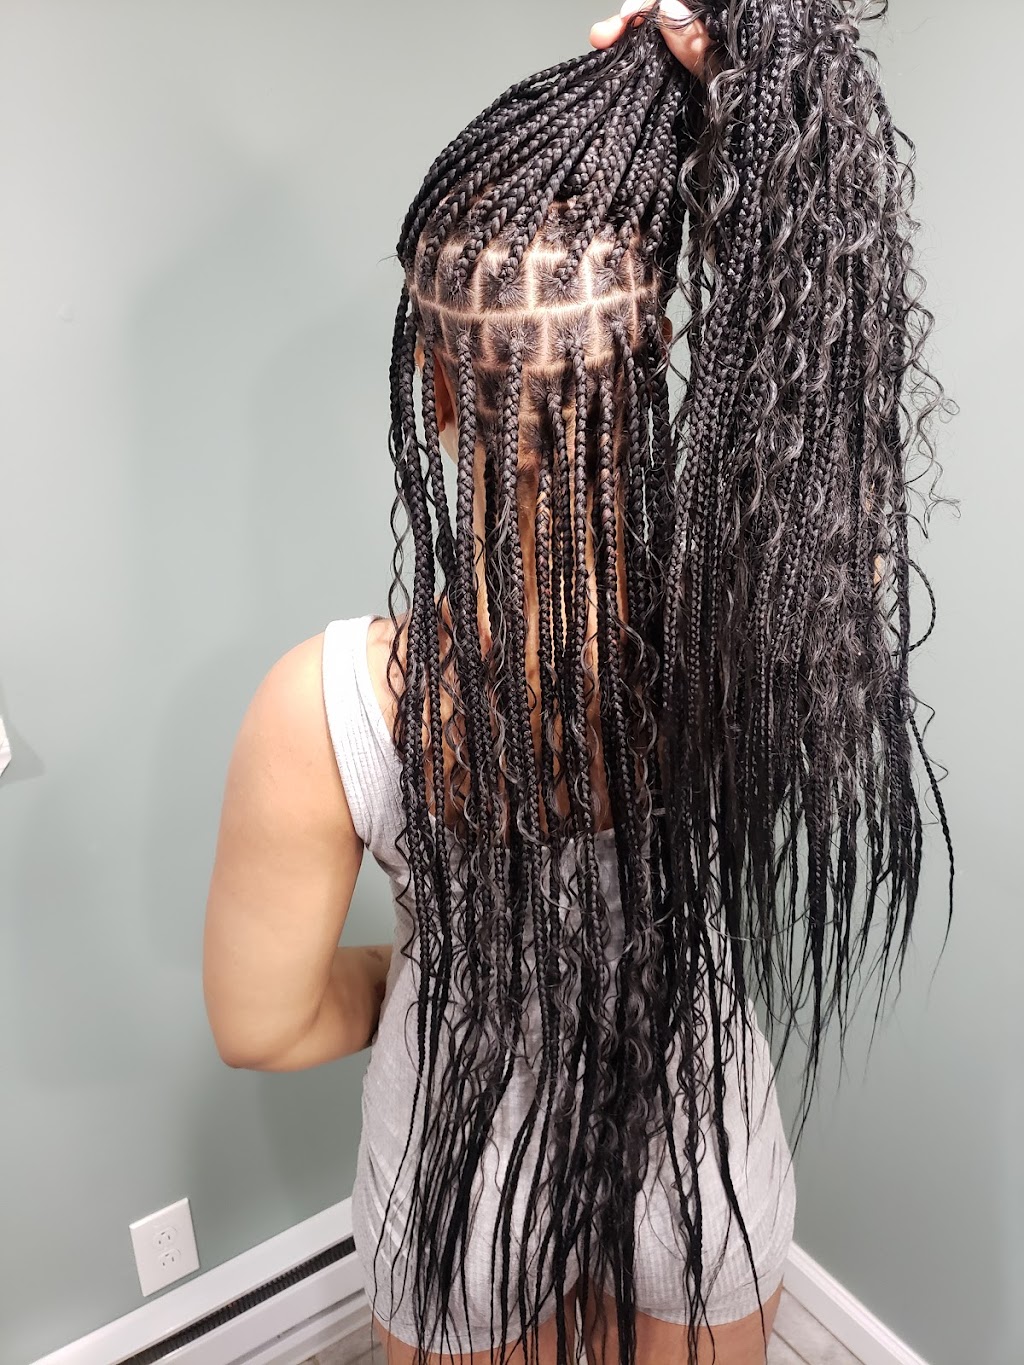 Braids by Dussu African hair braiding | 1103 Glenview St, Philadelphia, PA 19111 | Phone: (267) 847-0220